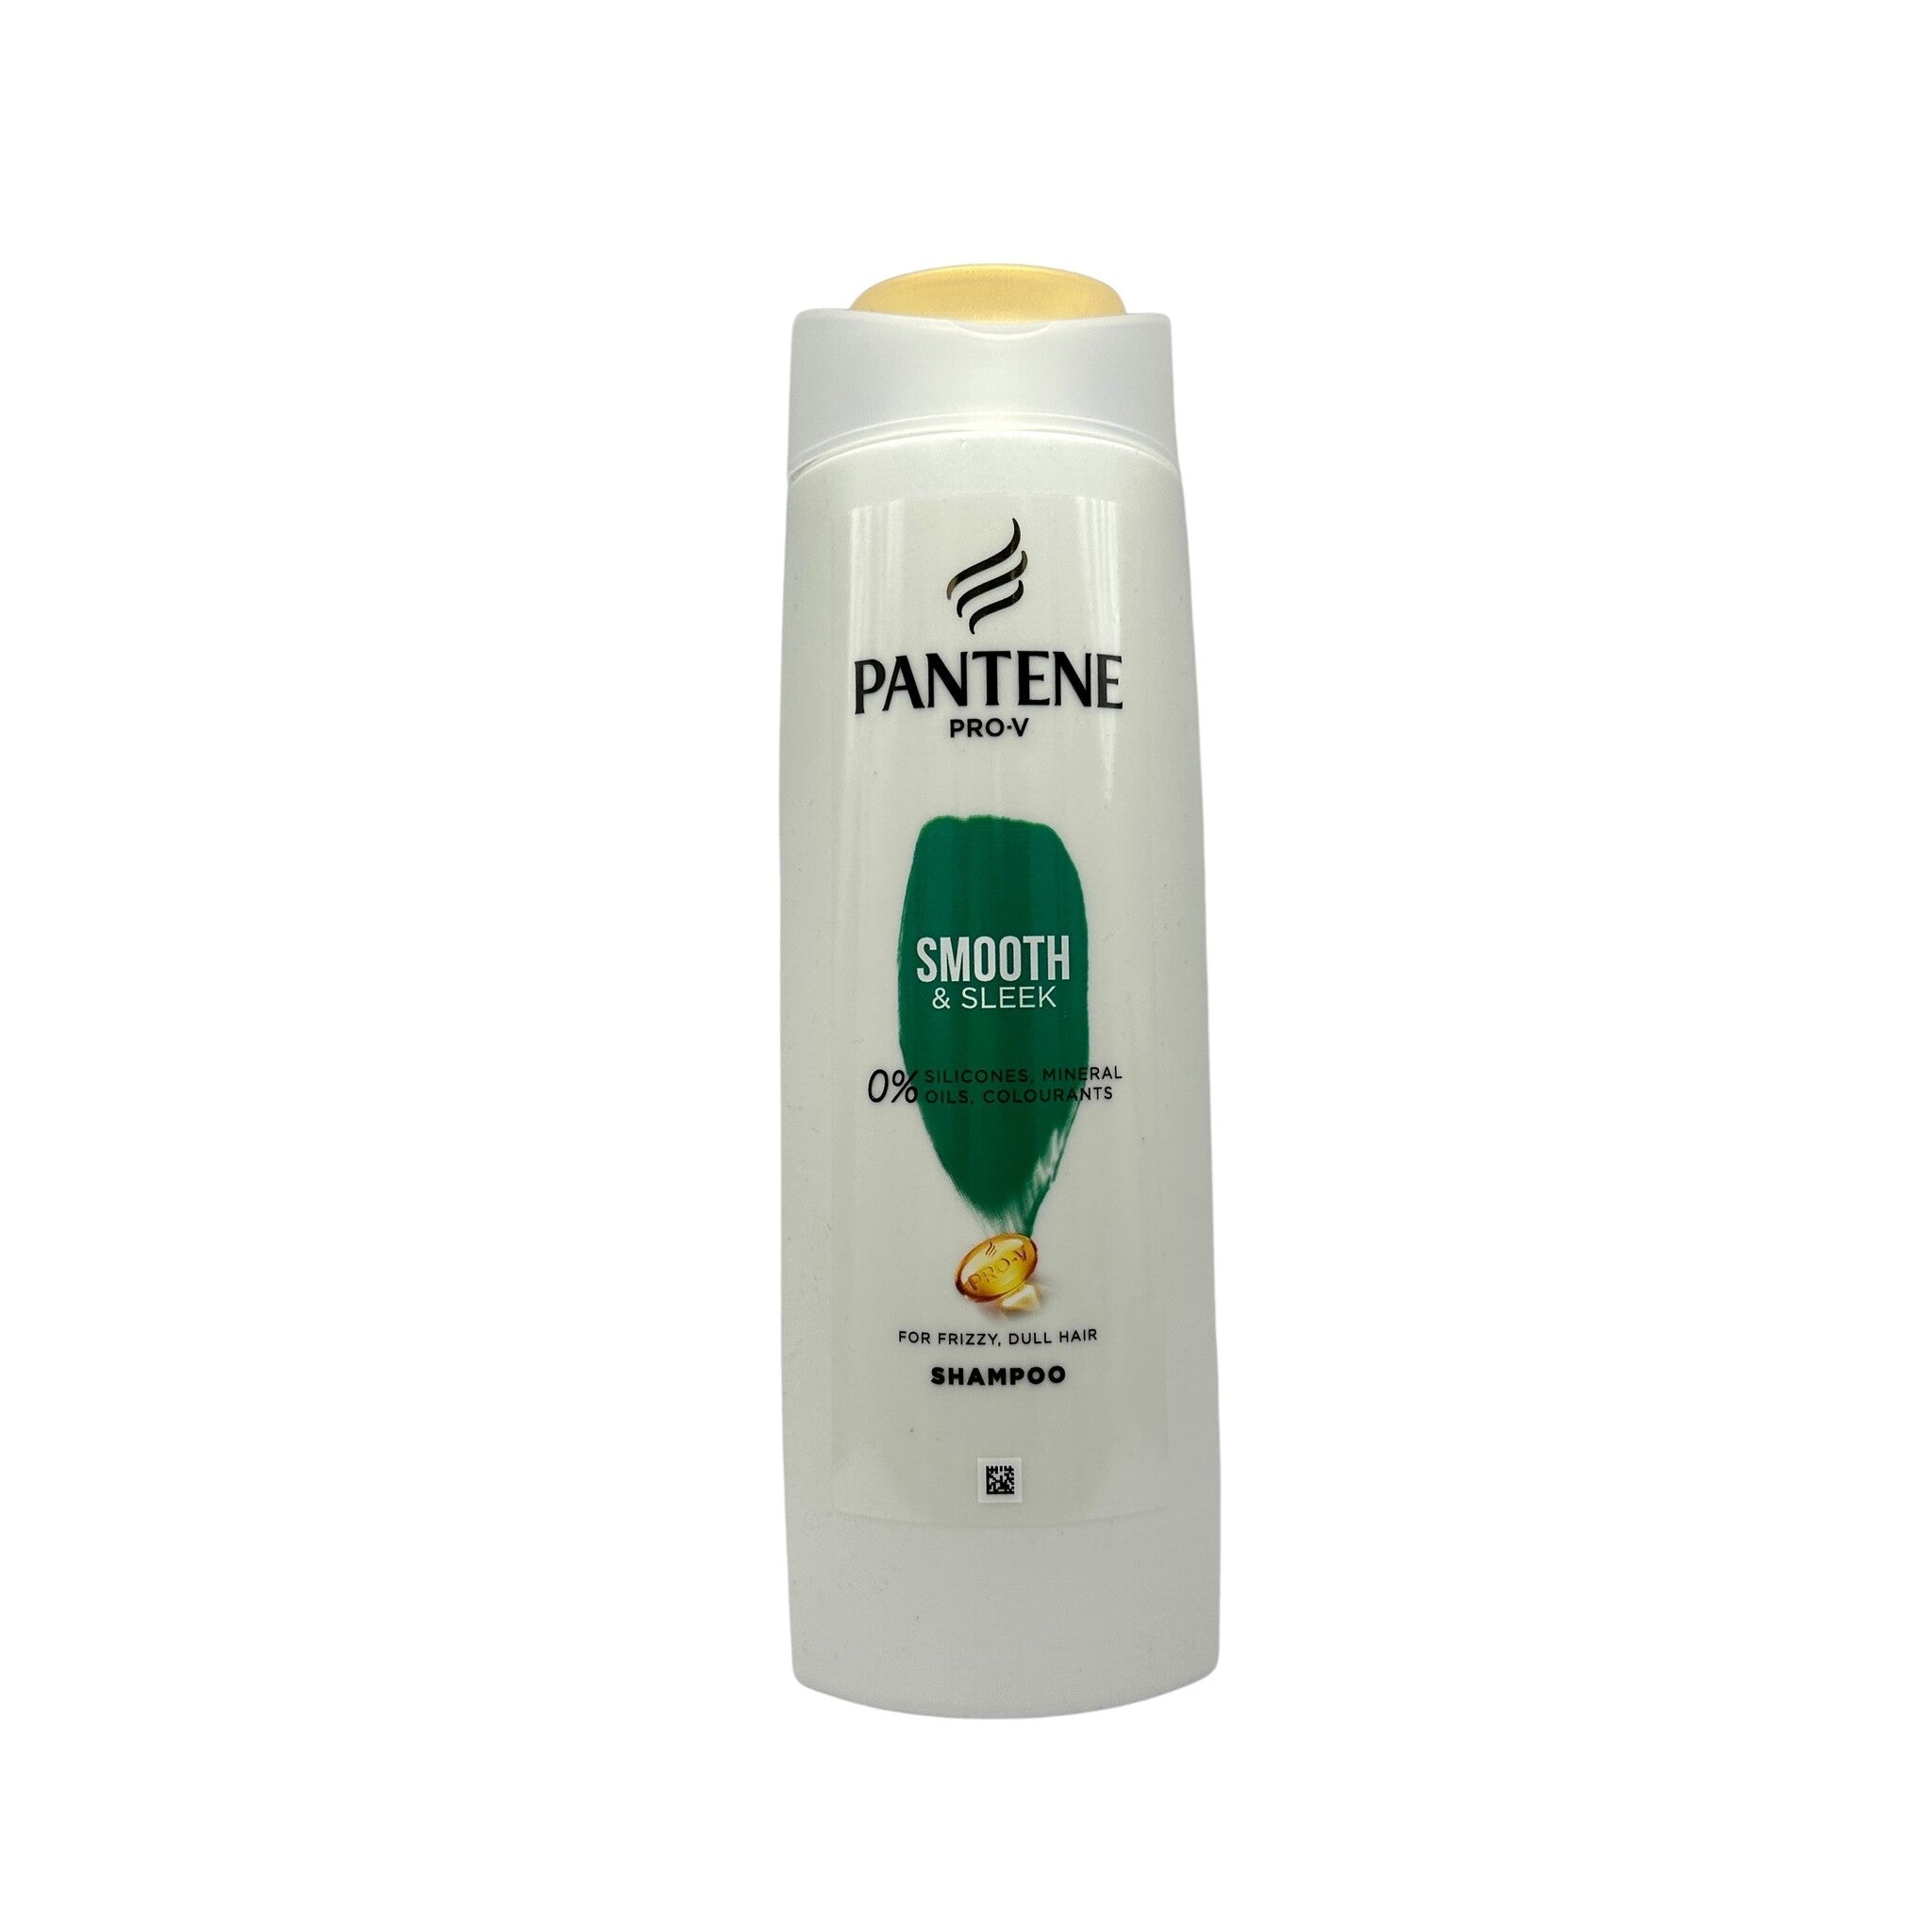 Pantene Smooth & Sleek shampoo 360ml